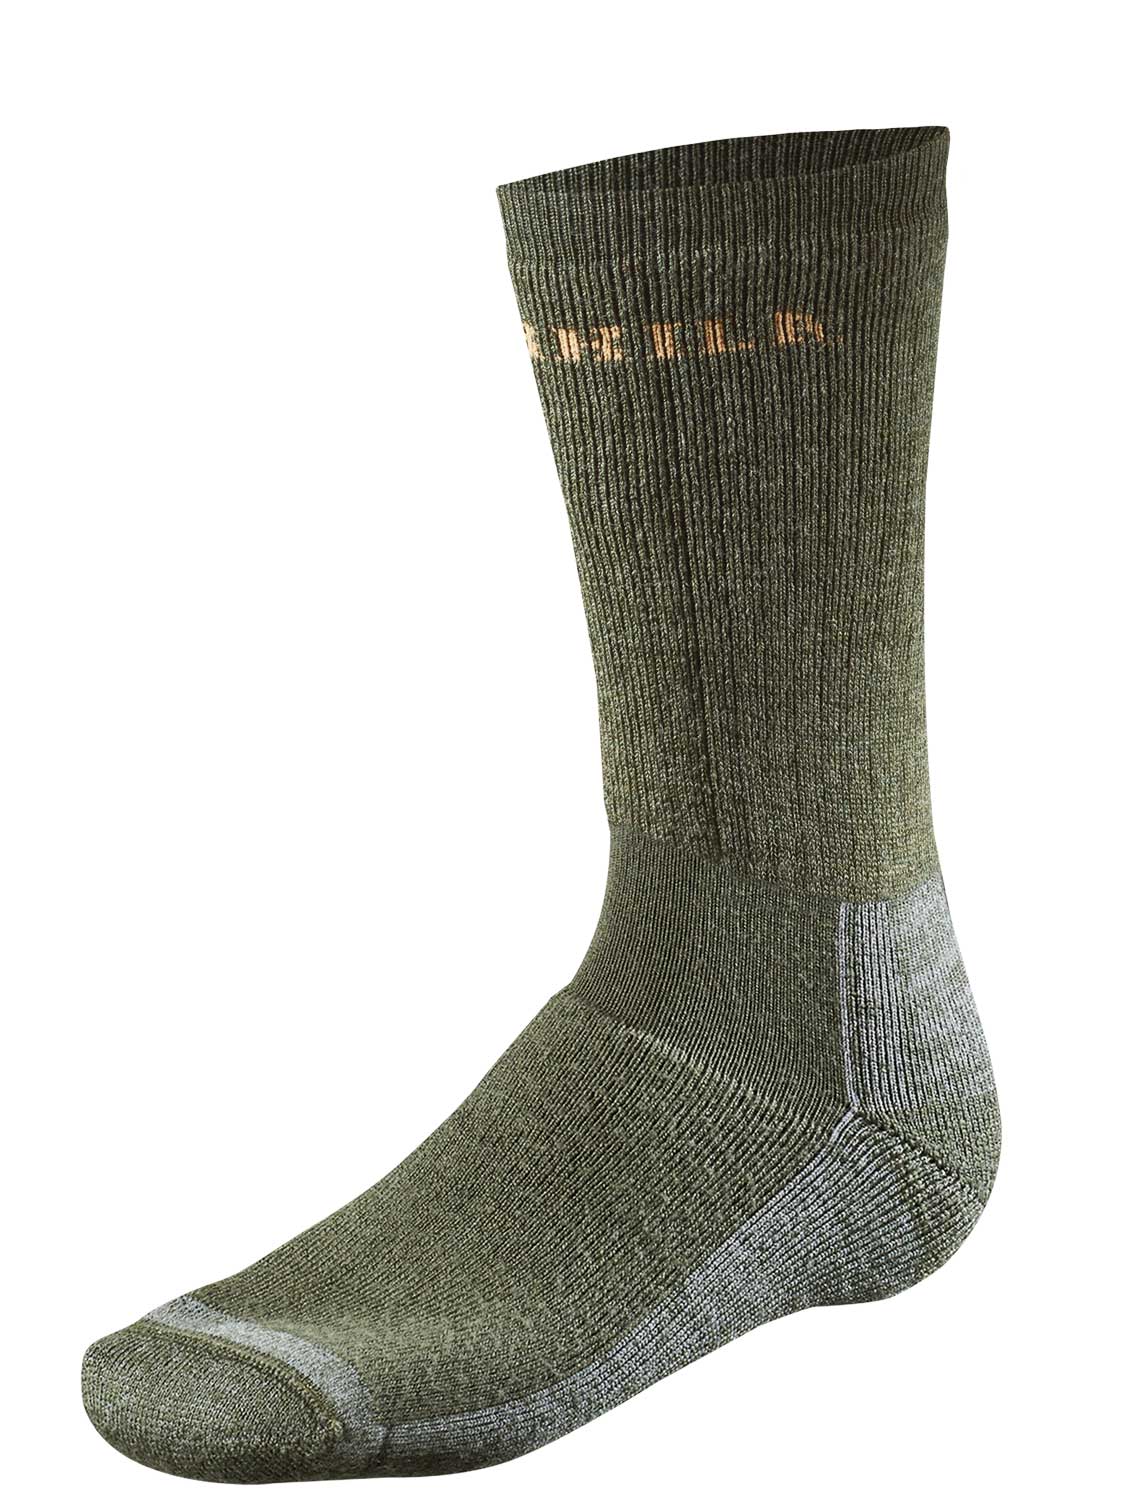 HARKILA Socks - Pro Hunter Merino Wool With NanoGlide - Dark Green